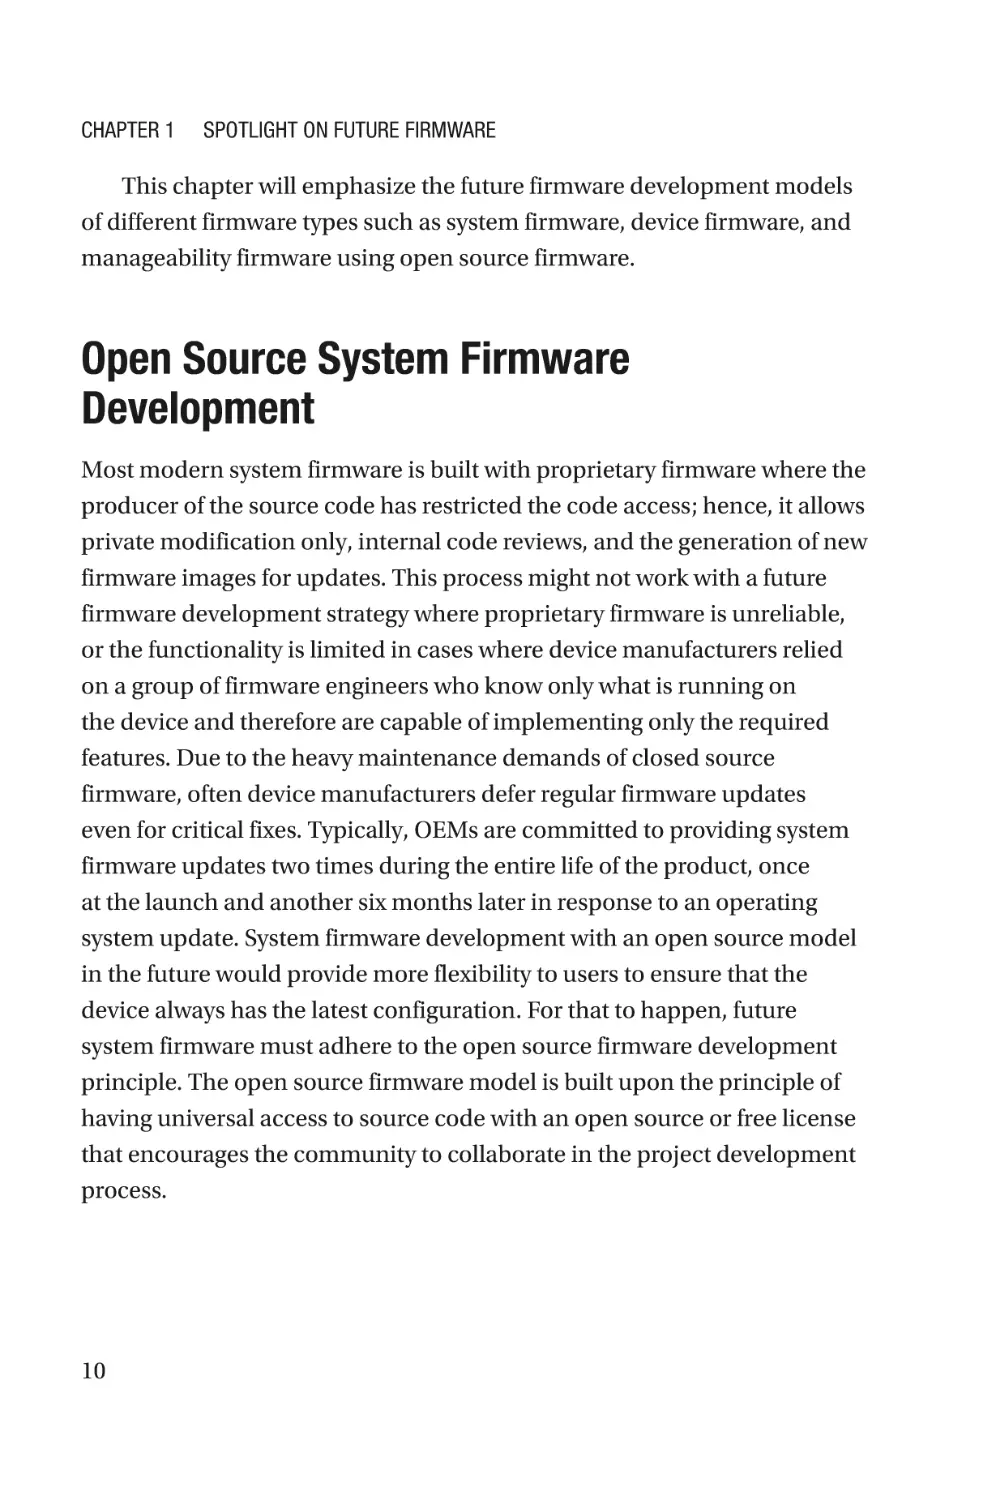 Open Source System Firmware Development